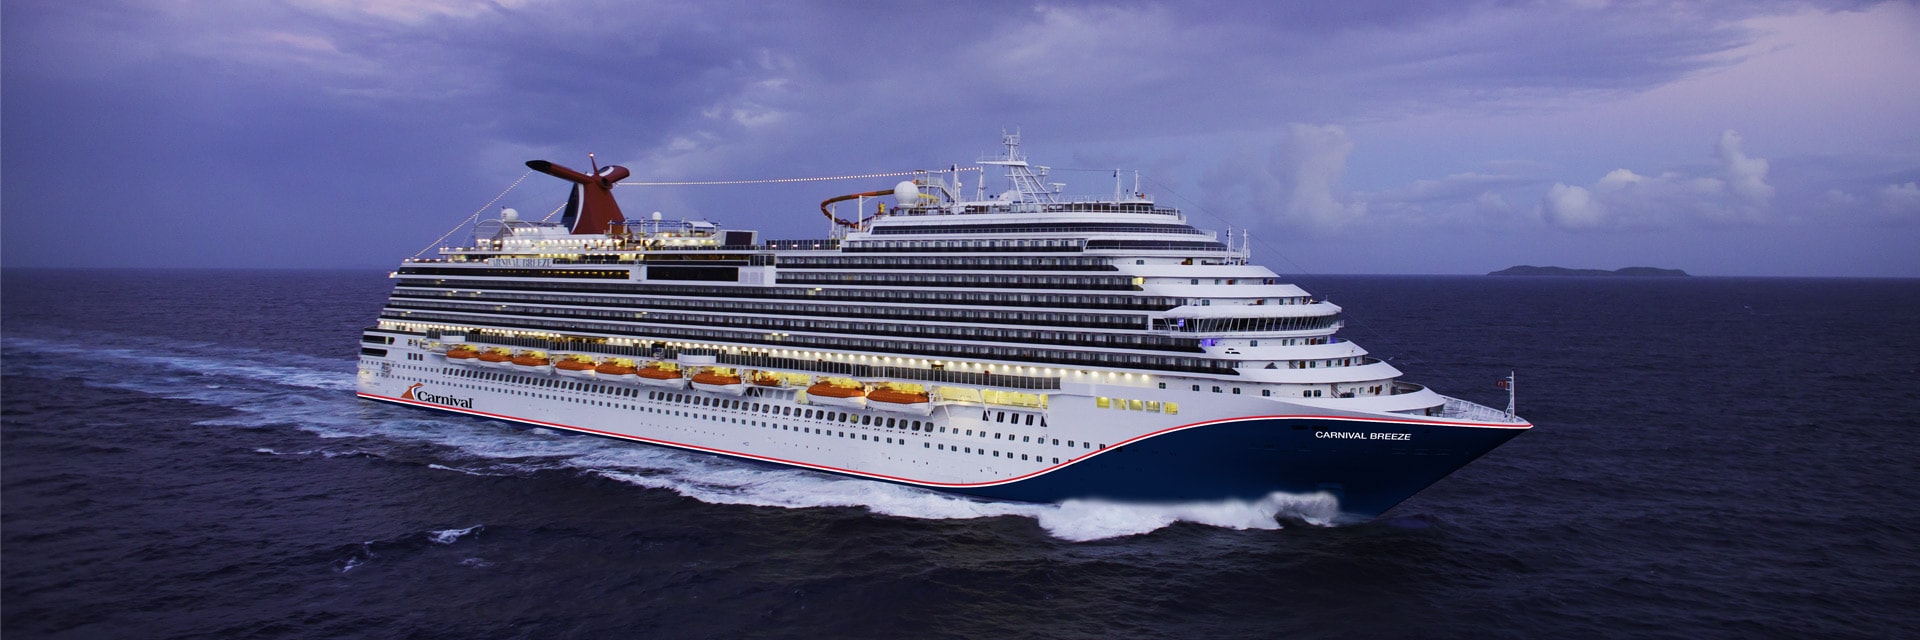 carnival cruise ships in galveston